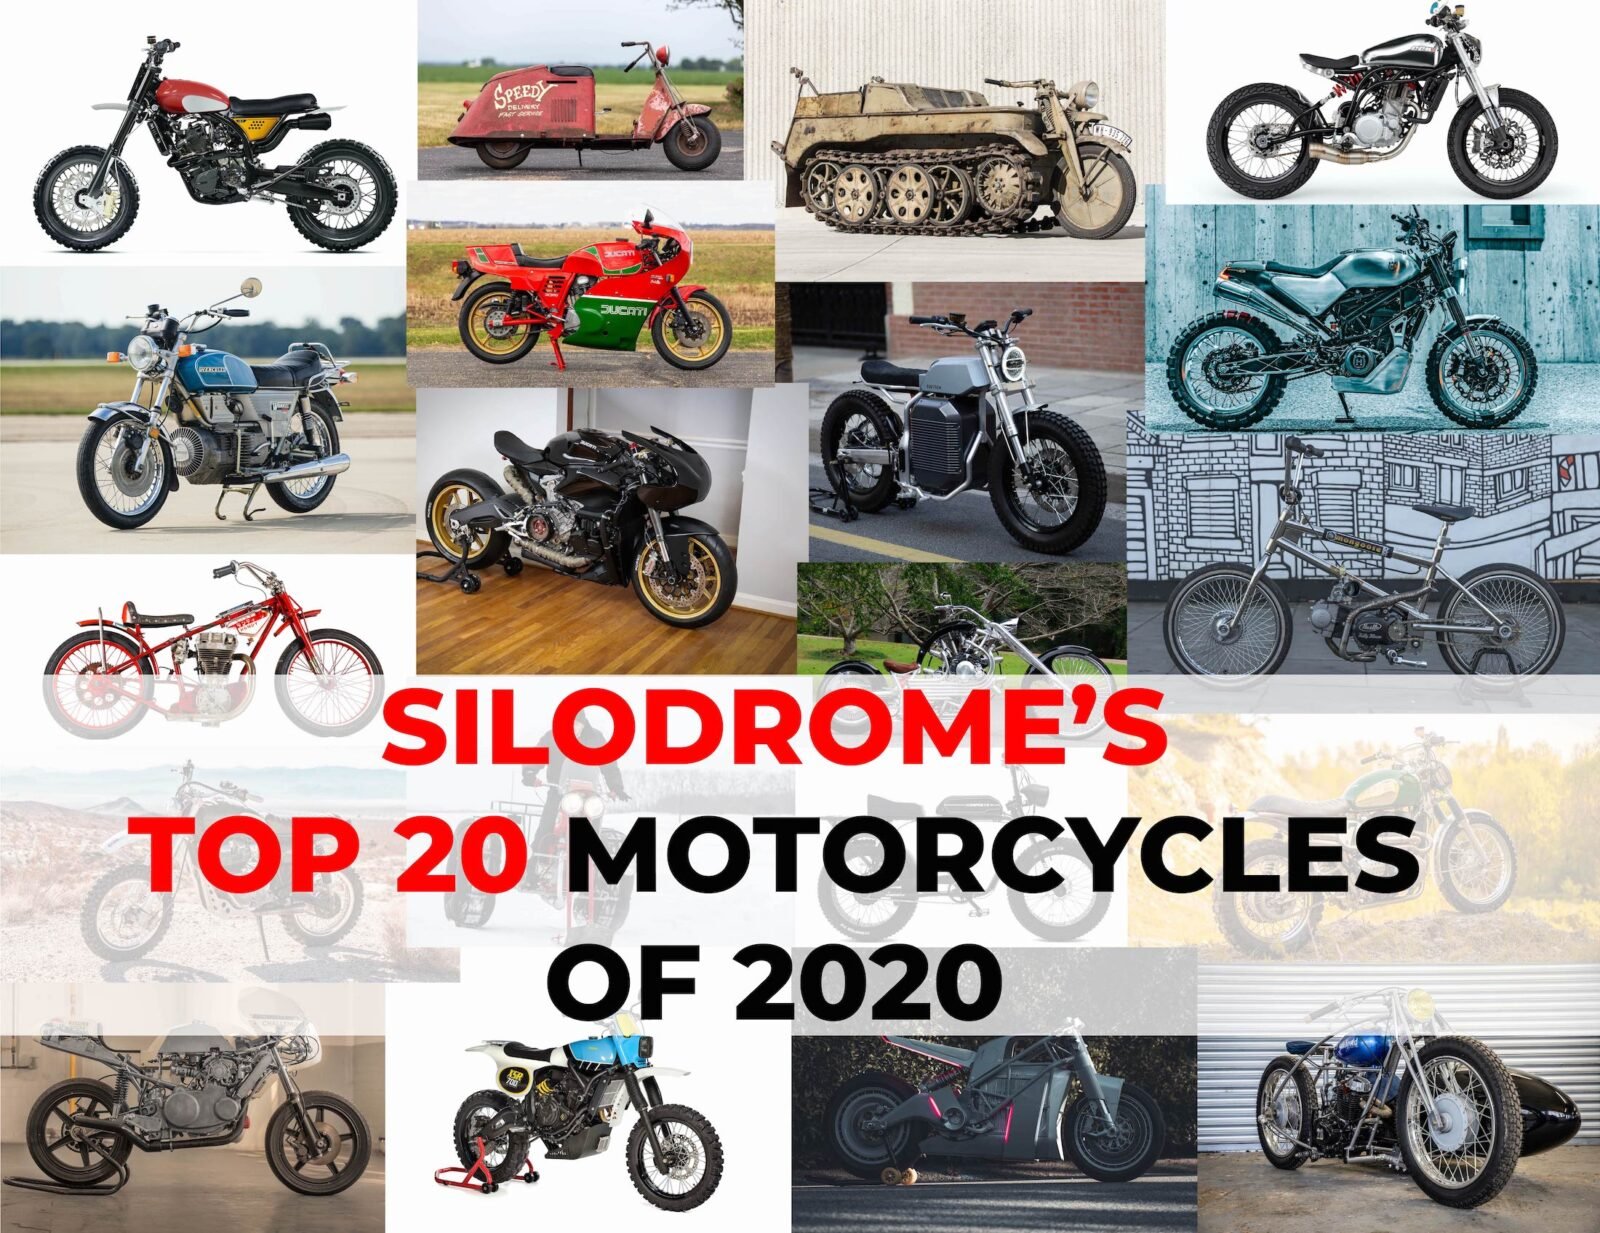 Top 20 Motorcycles of 2020